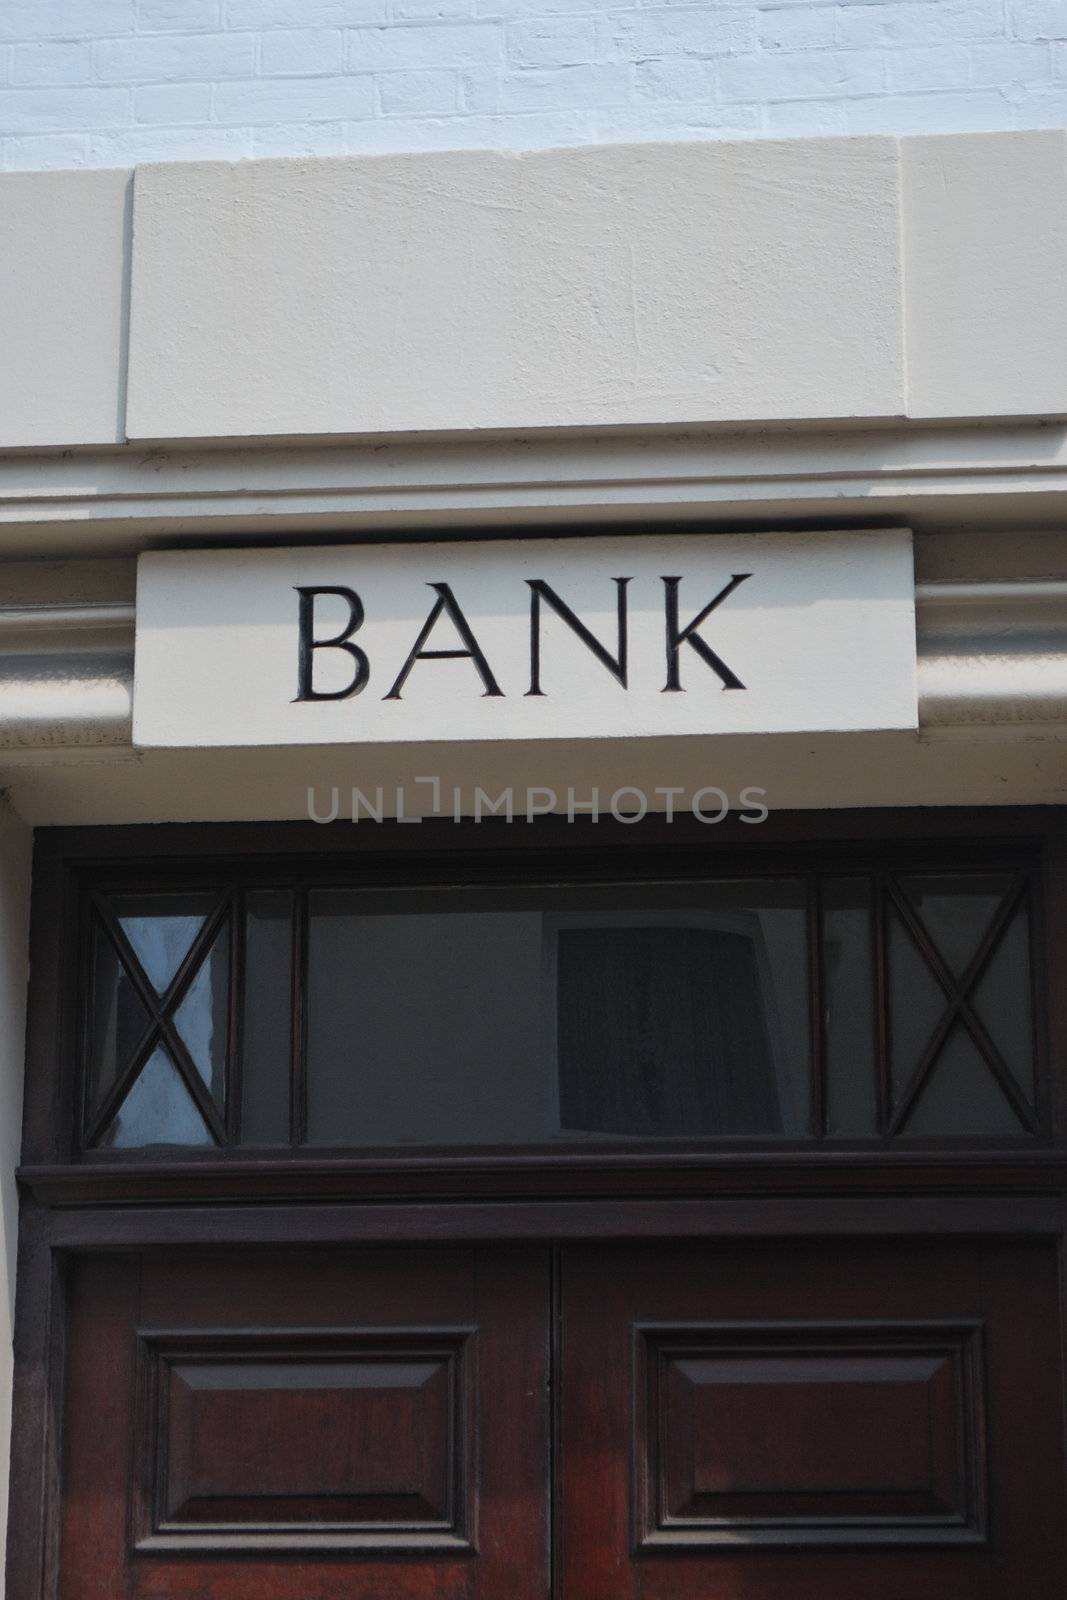 Olkd fashioned Bank Door by pauws99